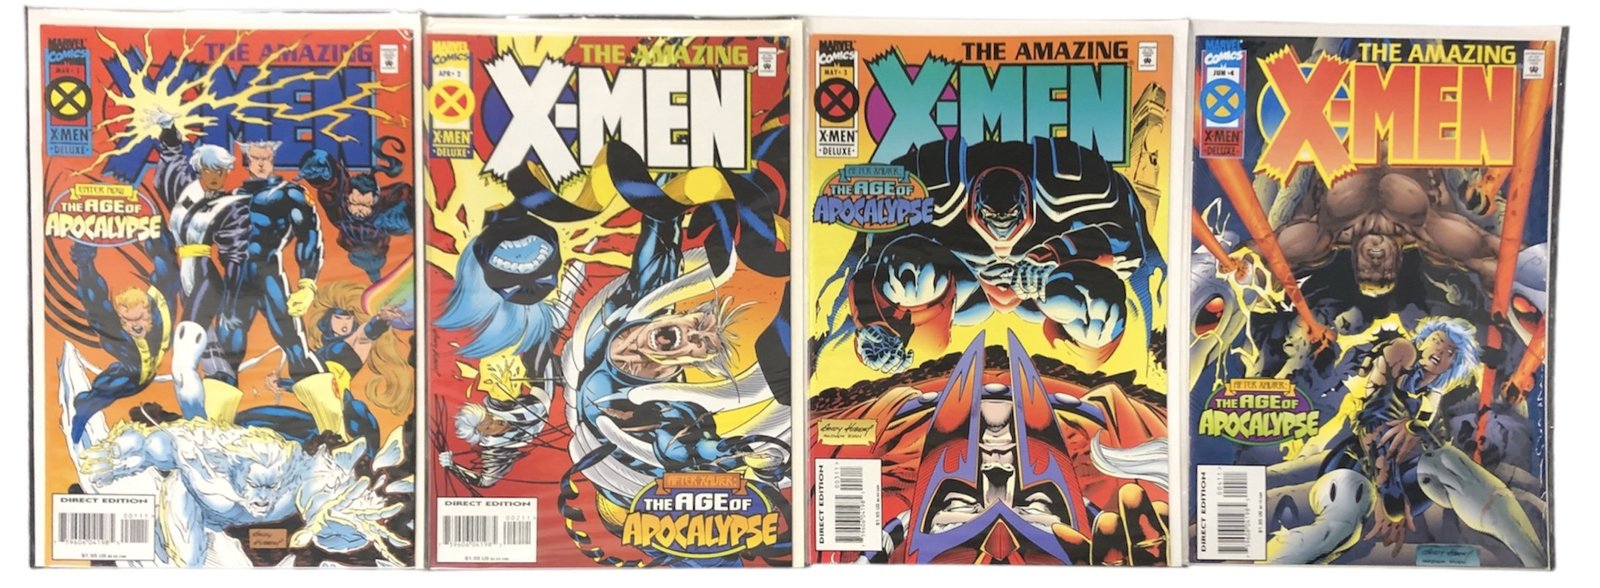 Marvel Comic books The amazing x-men #1-4 364291 - $14.99